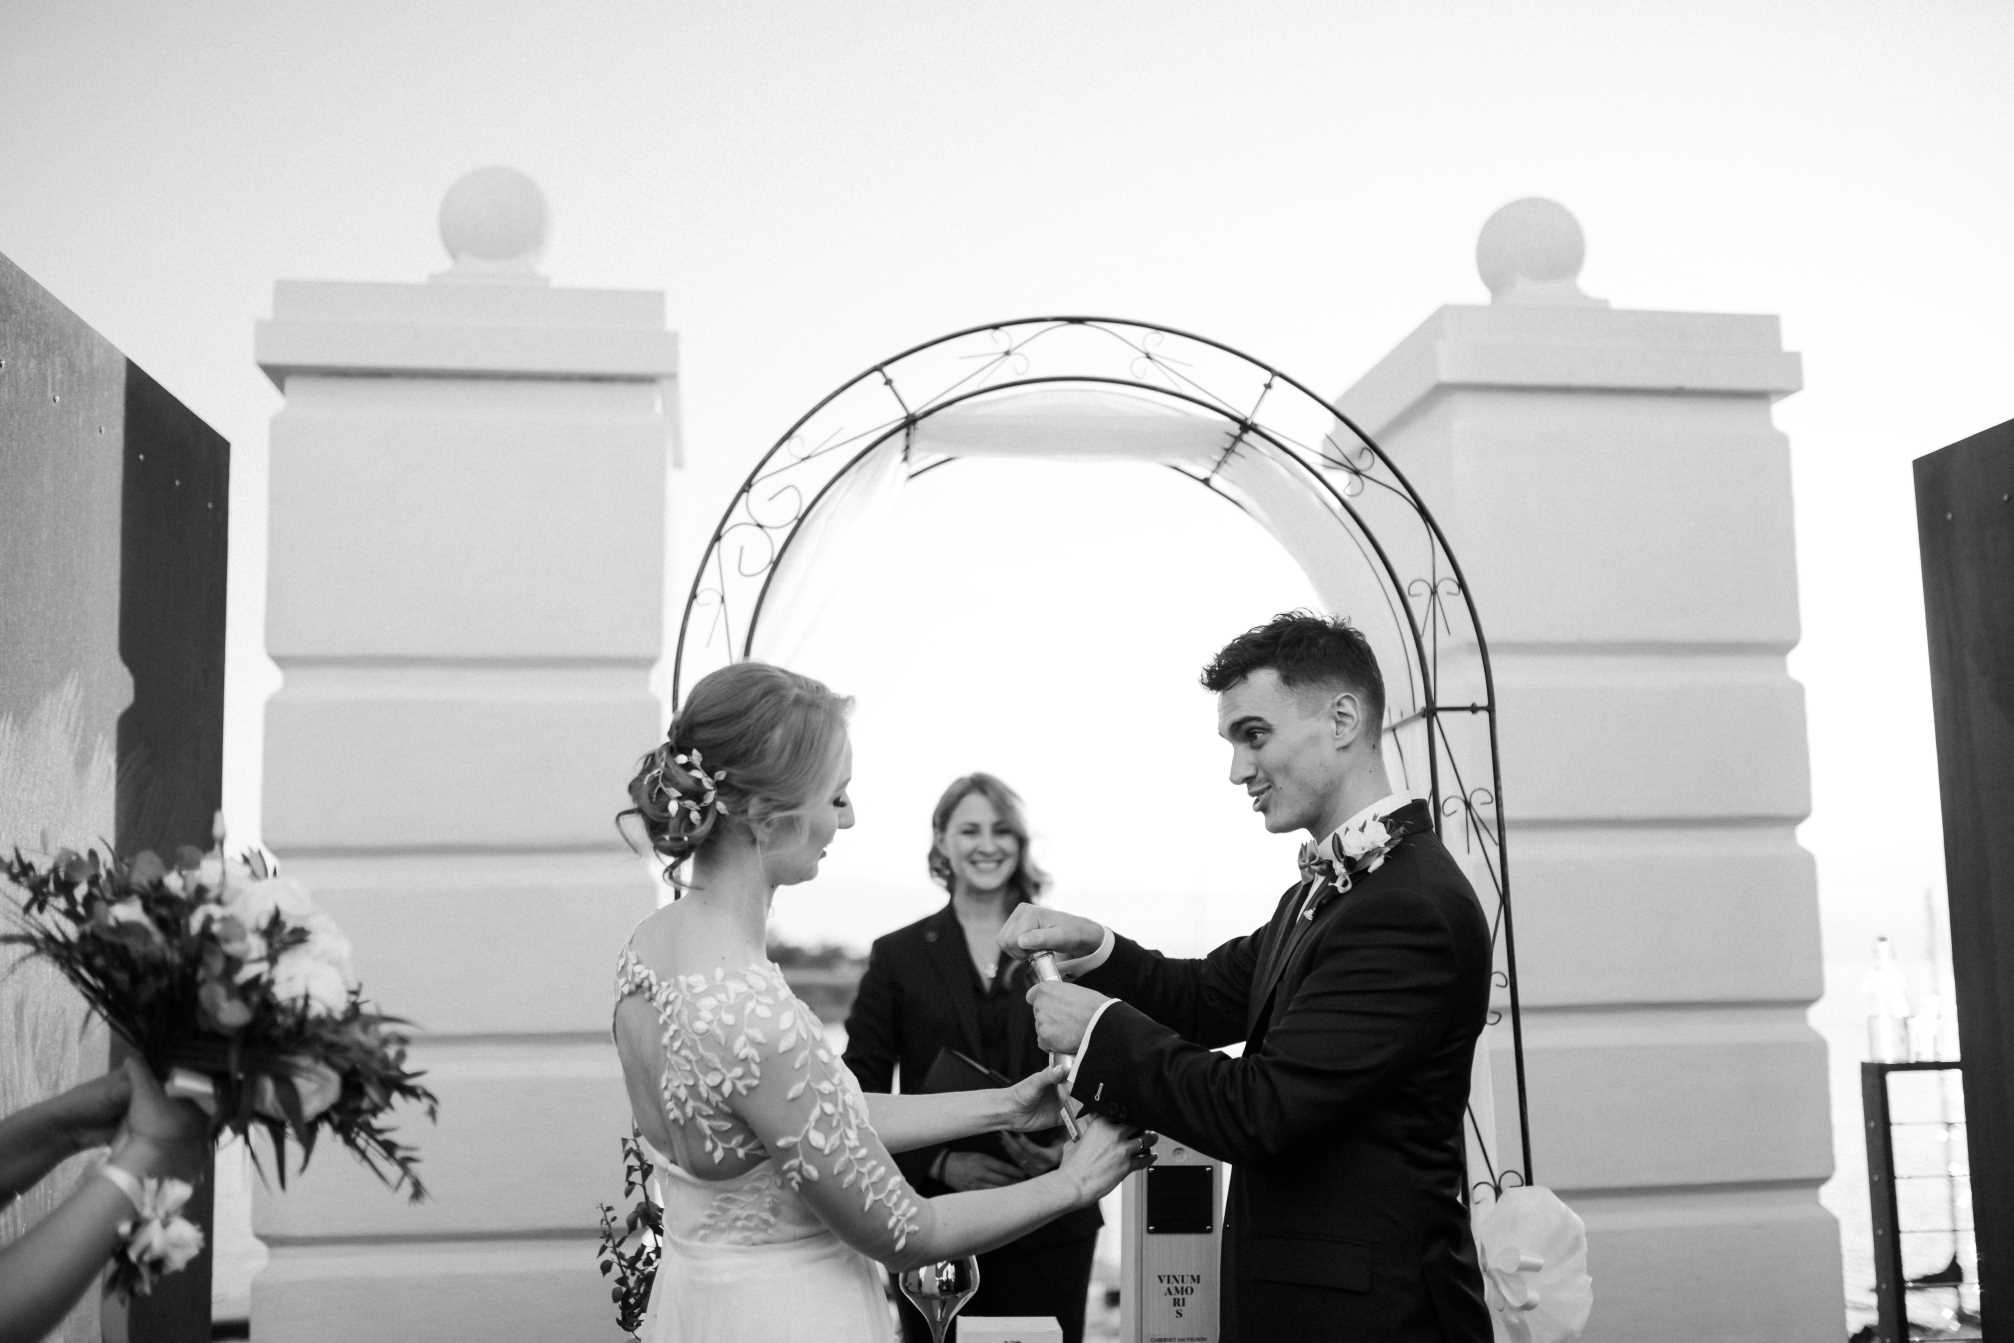 Extravagant wedding: Lana i Nikola Kostrenčić